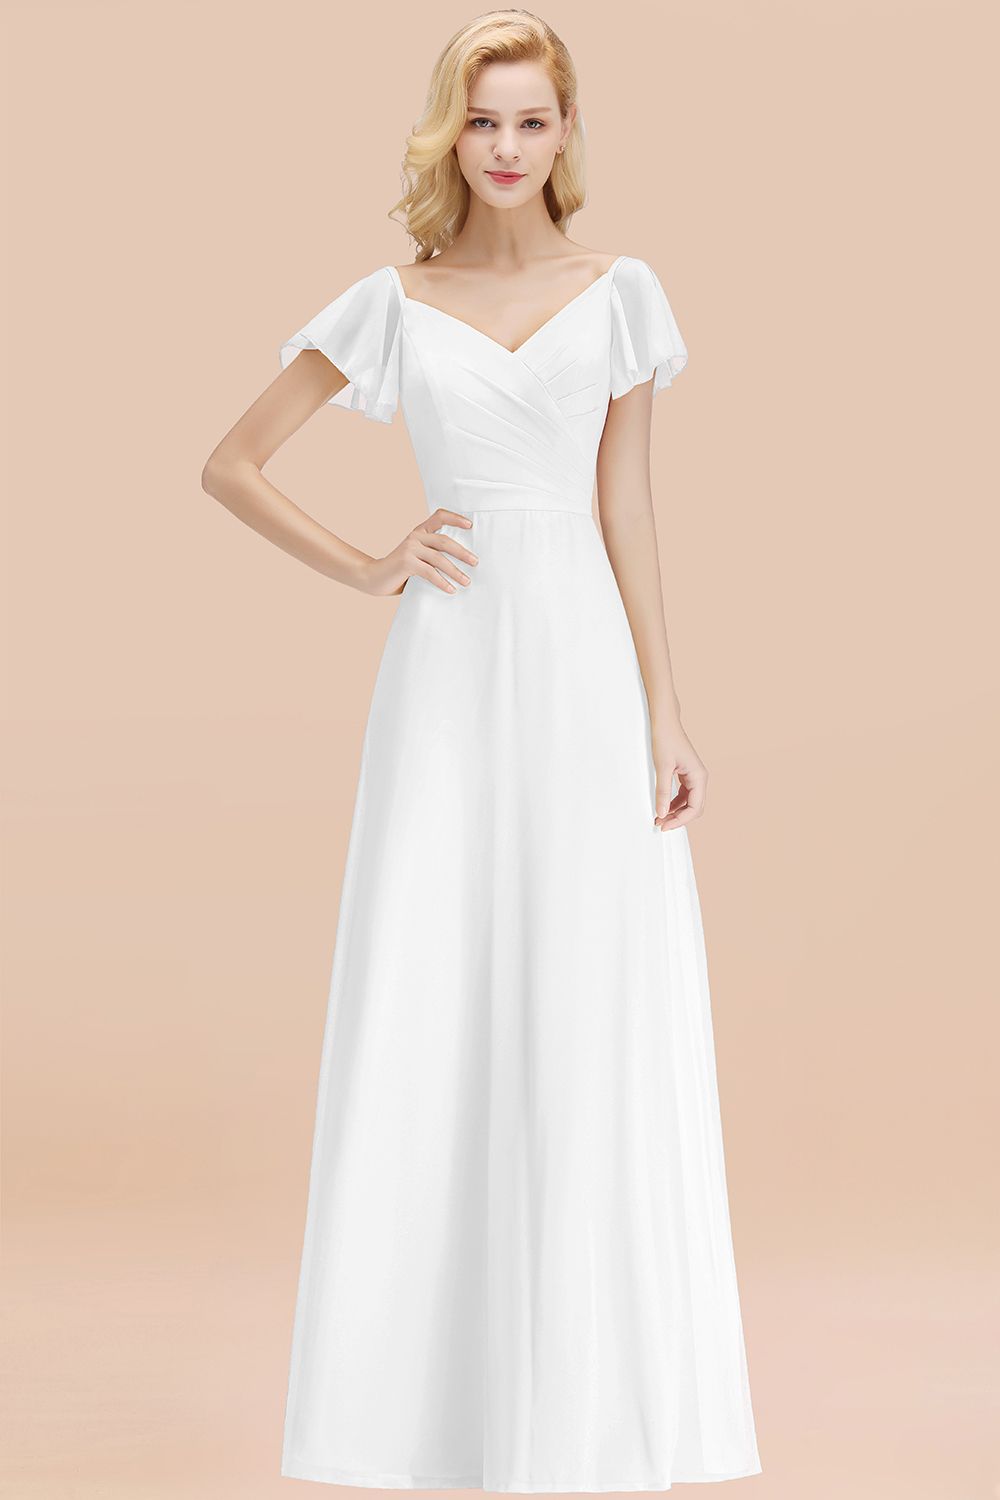 BMbridal Elegent Short-Sleeve Long Bridesmaid Dress Online Yellow Chiffon Hochzeit Party Dress